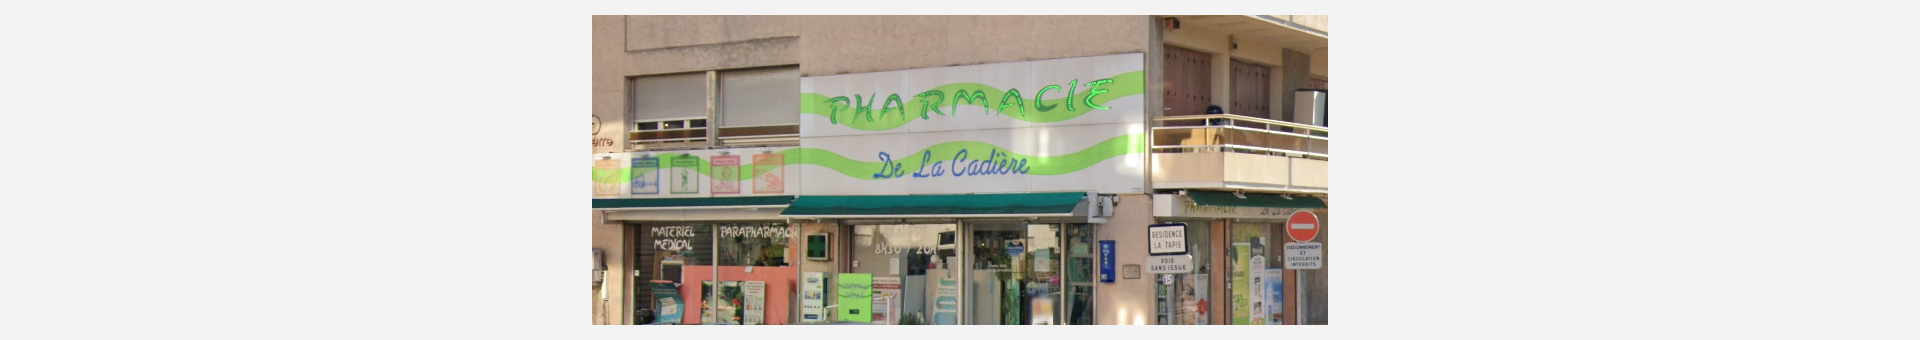 Pharmacie de la Cadière,Marignane